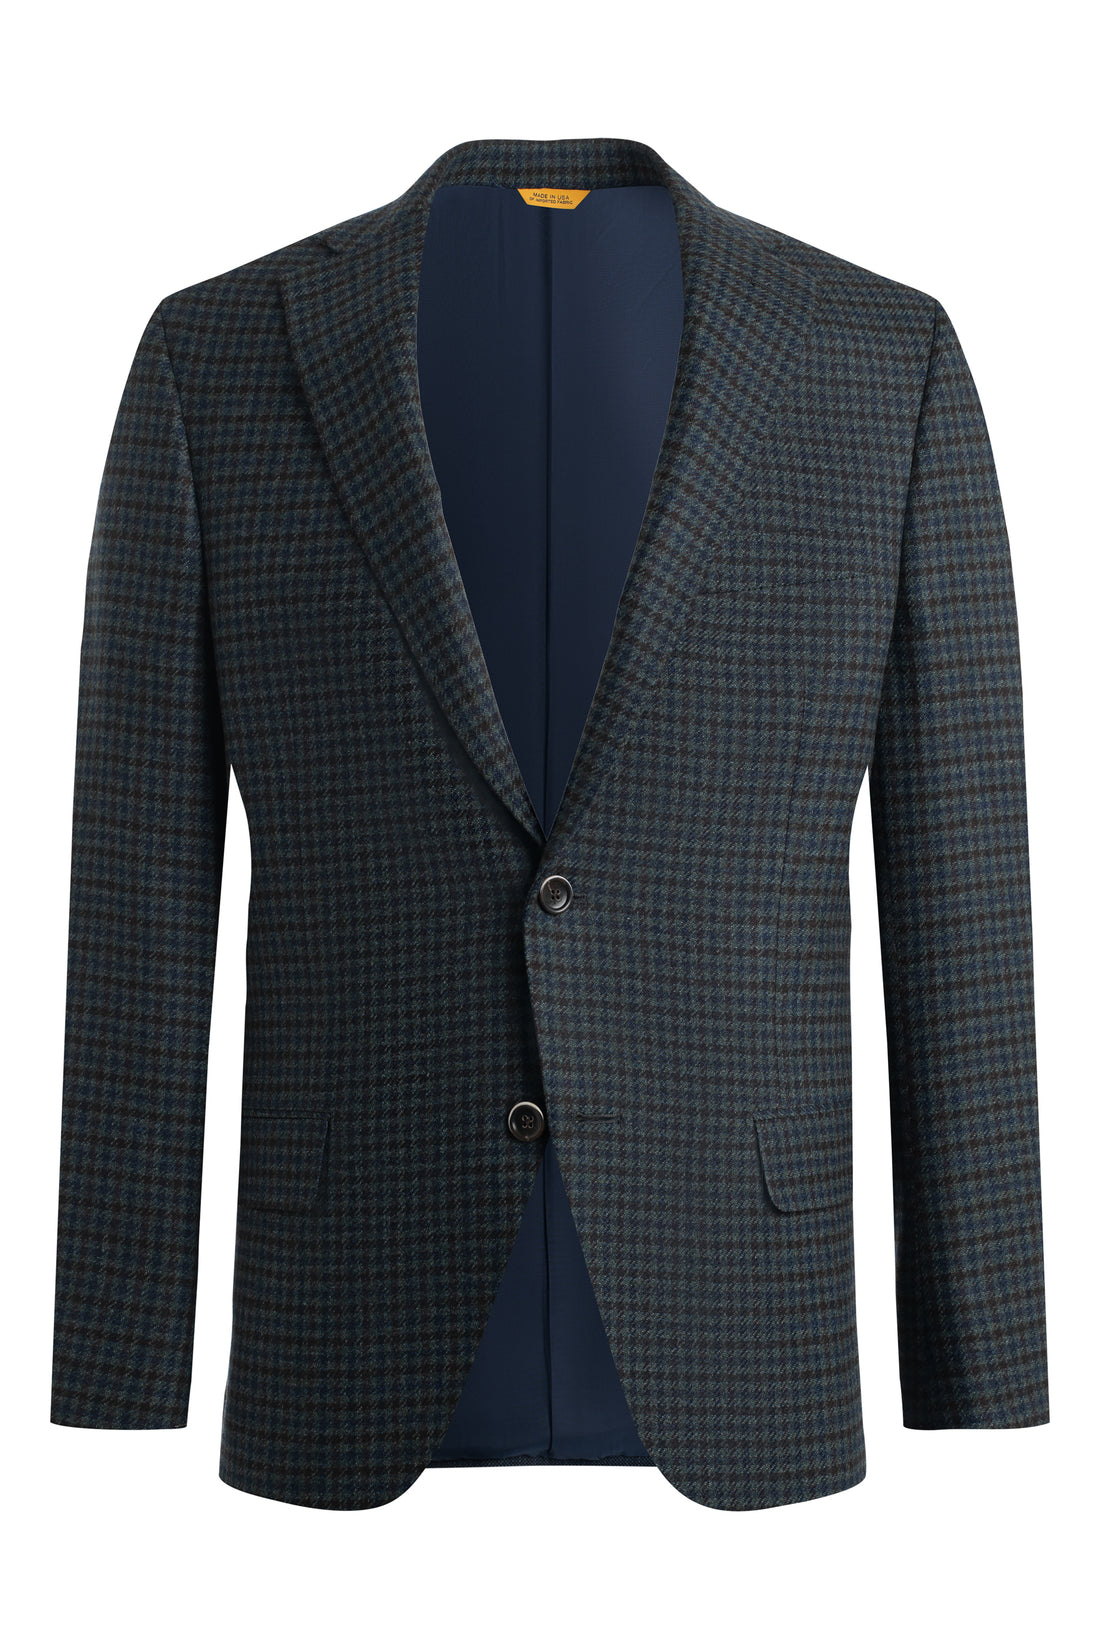 Zegna Multi Check Wool Silk Cashmere Jacket